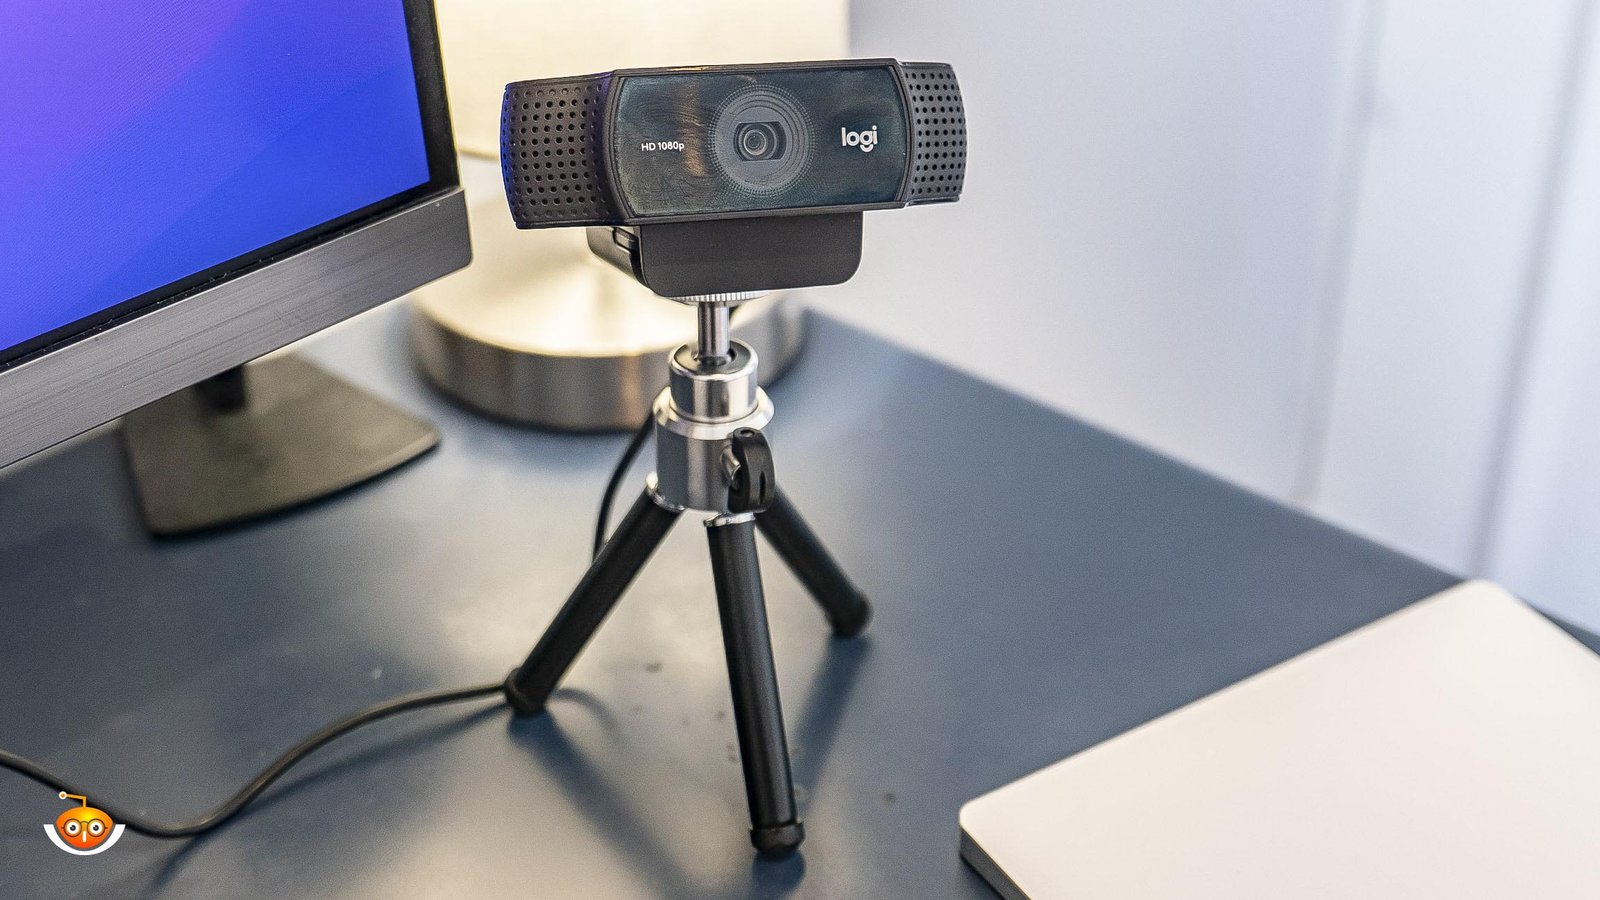 Logitech C922 Review: Top Webcam for Streamers